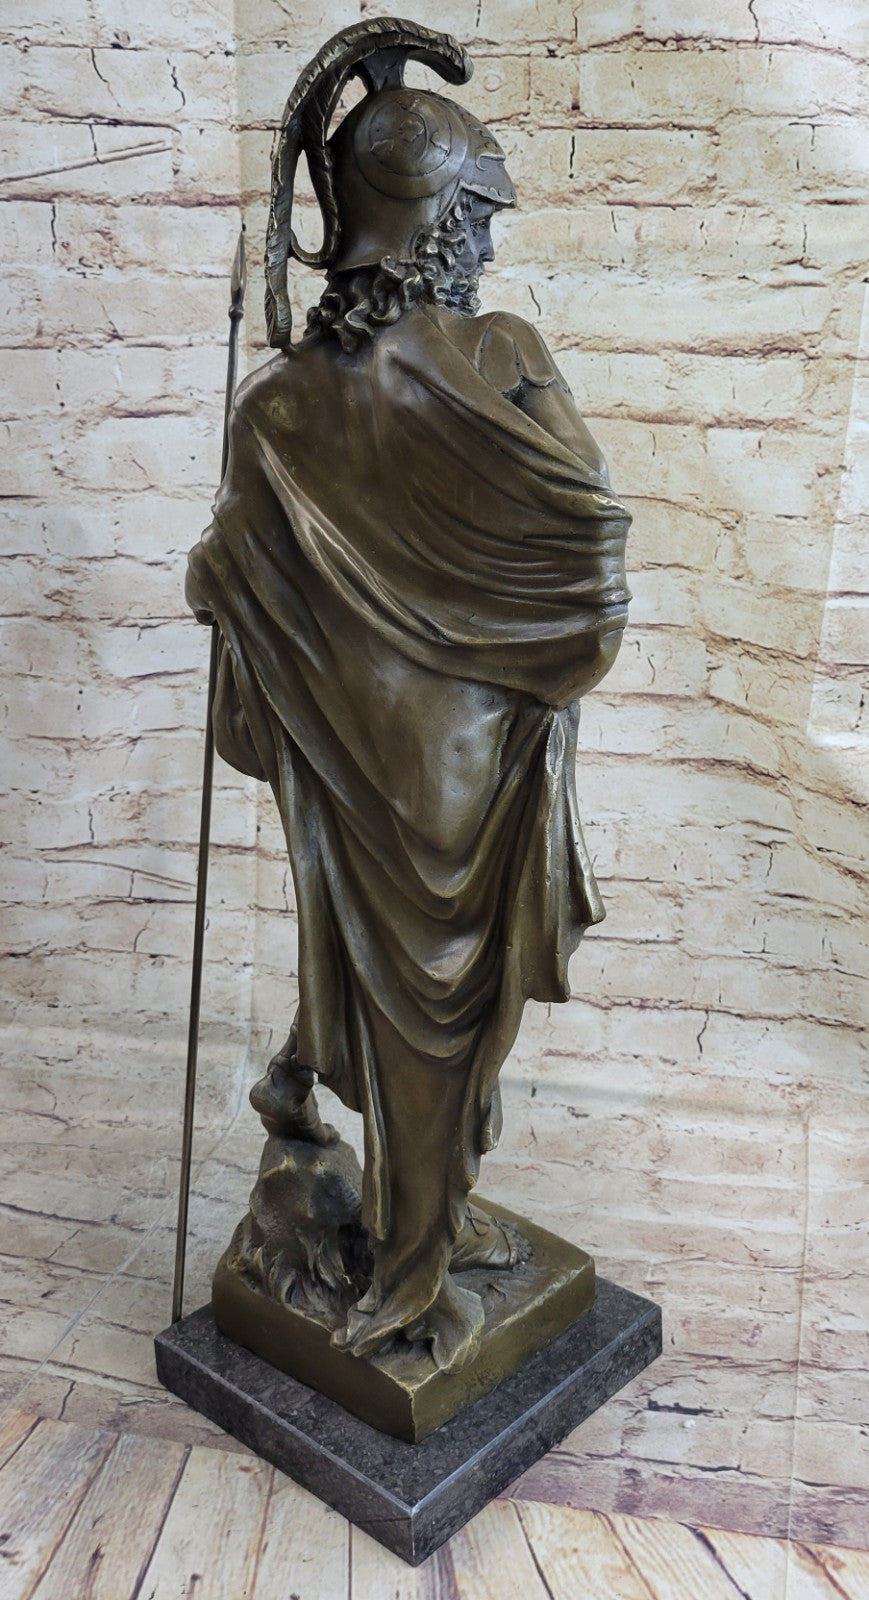 RARE ANCIENT GRECO-ROMAN GLADIATOR WARRIOR BRONZE LEGIONARY WEARING HELMET